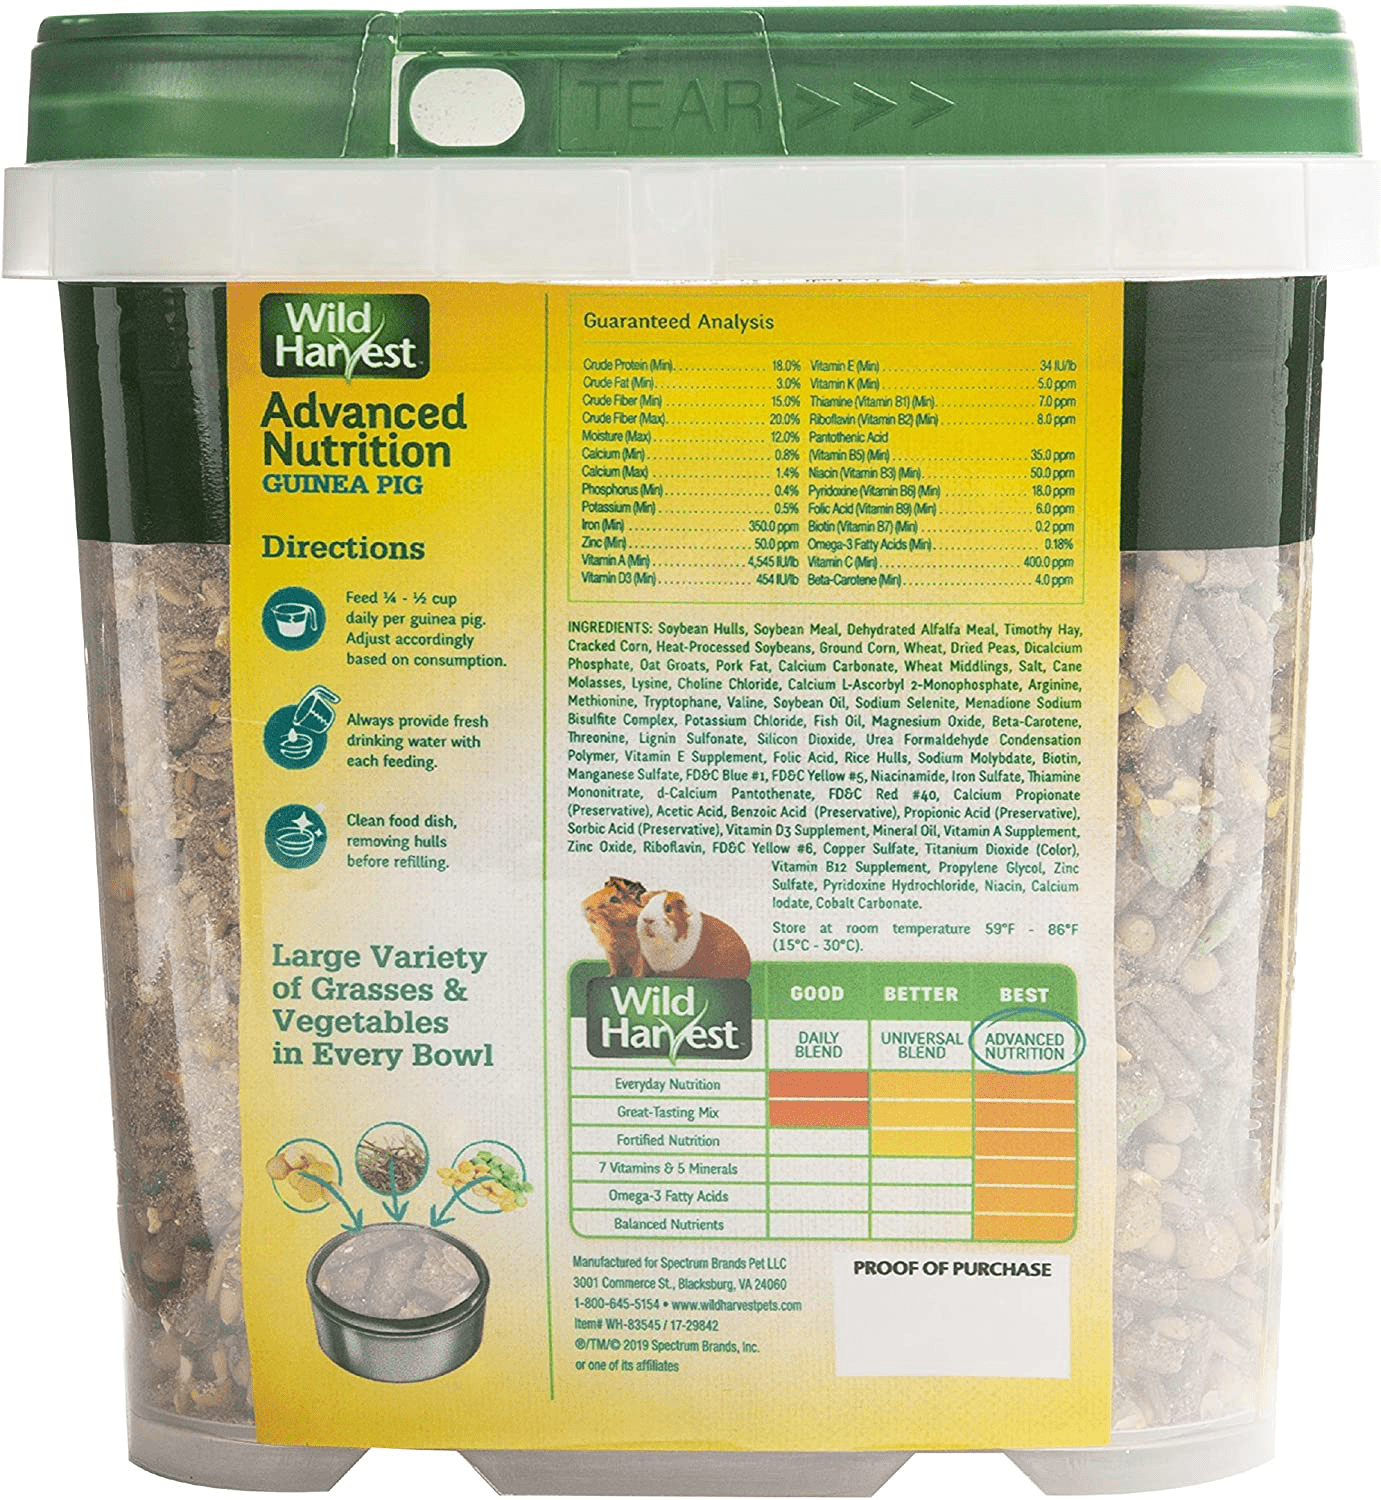 Wild Harvest Wh-83545 Wild Harvest Advanced Nutrition Diet for Guinea Pigs, 4.5-Pound